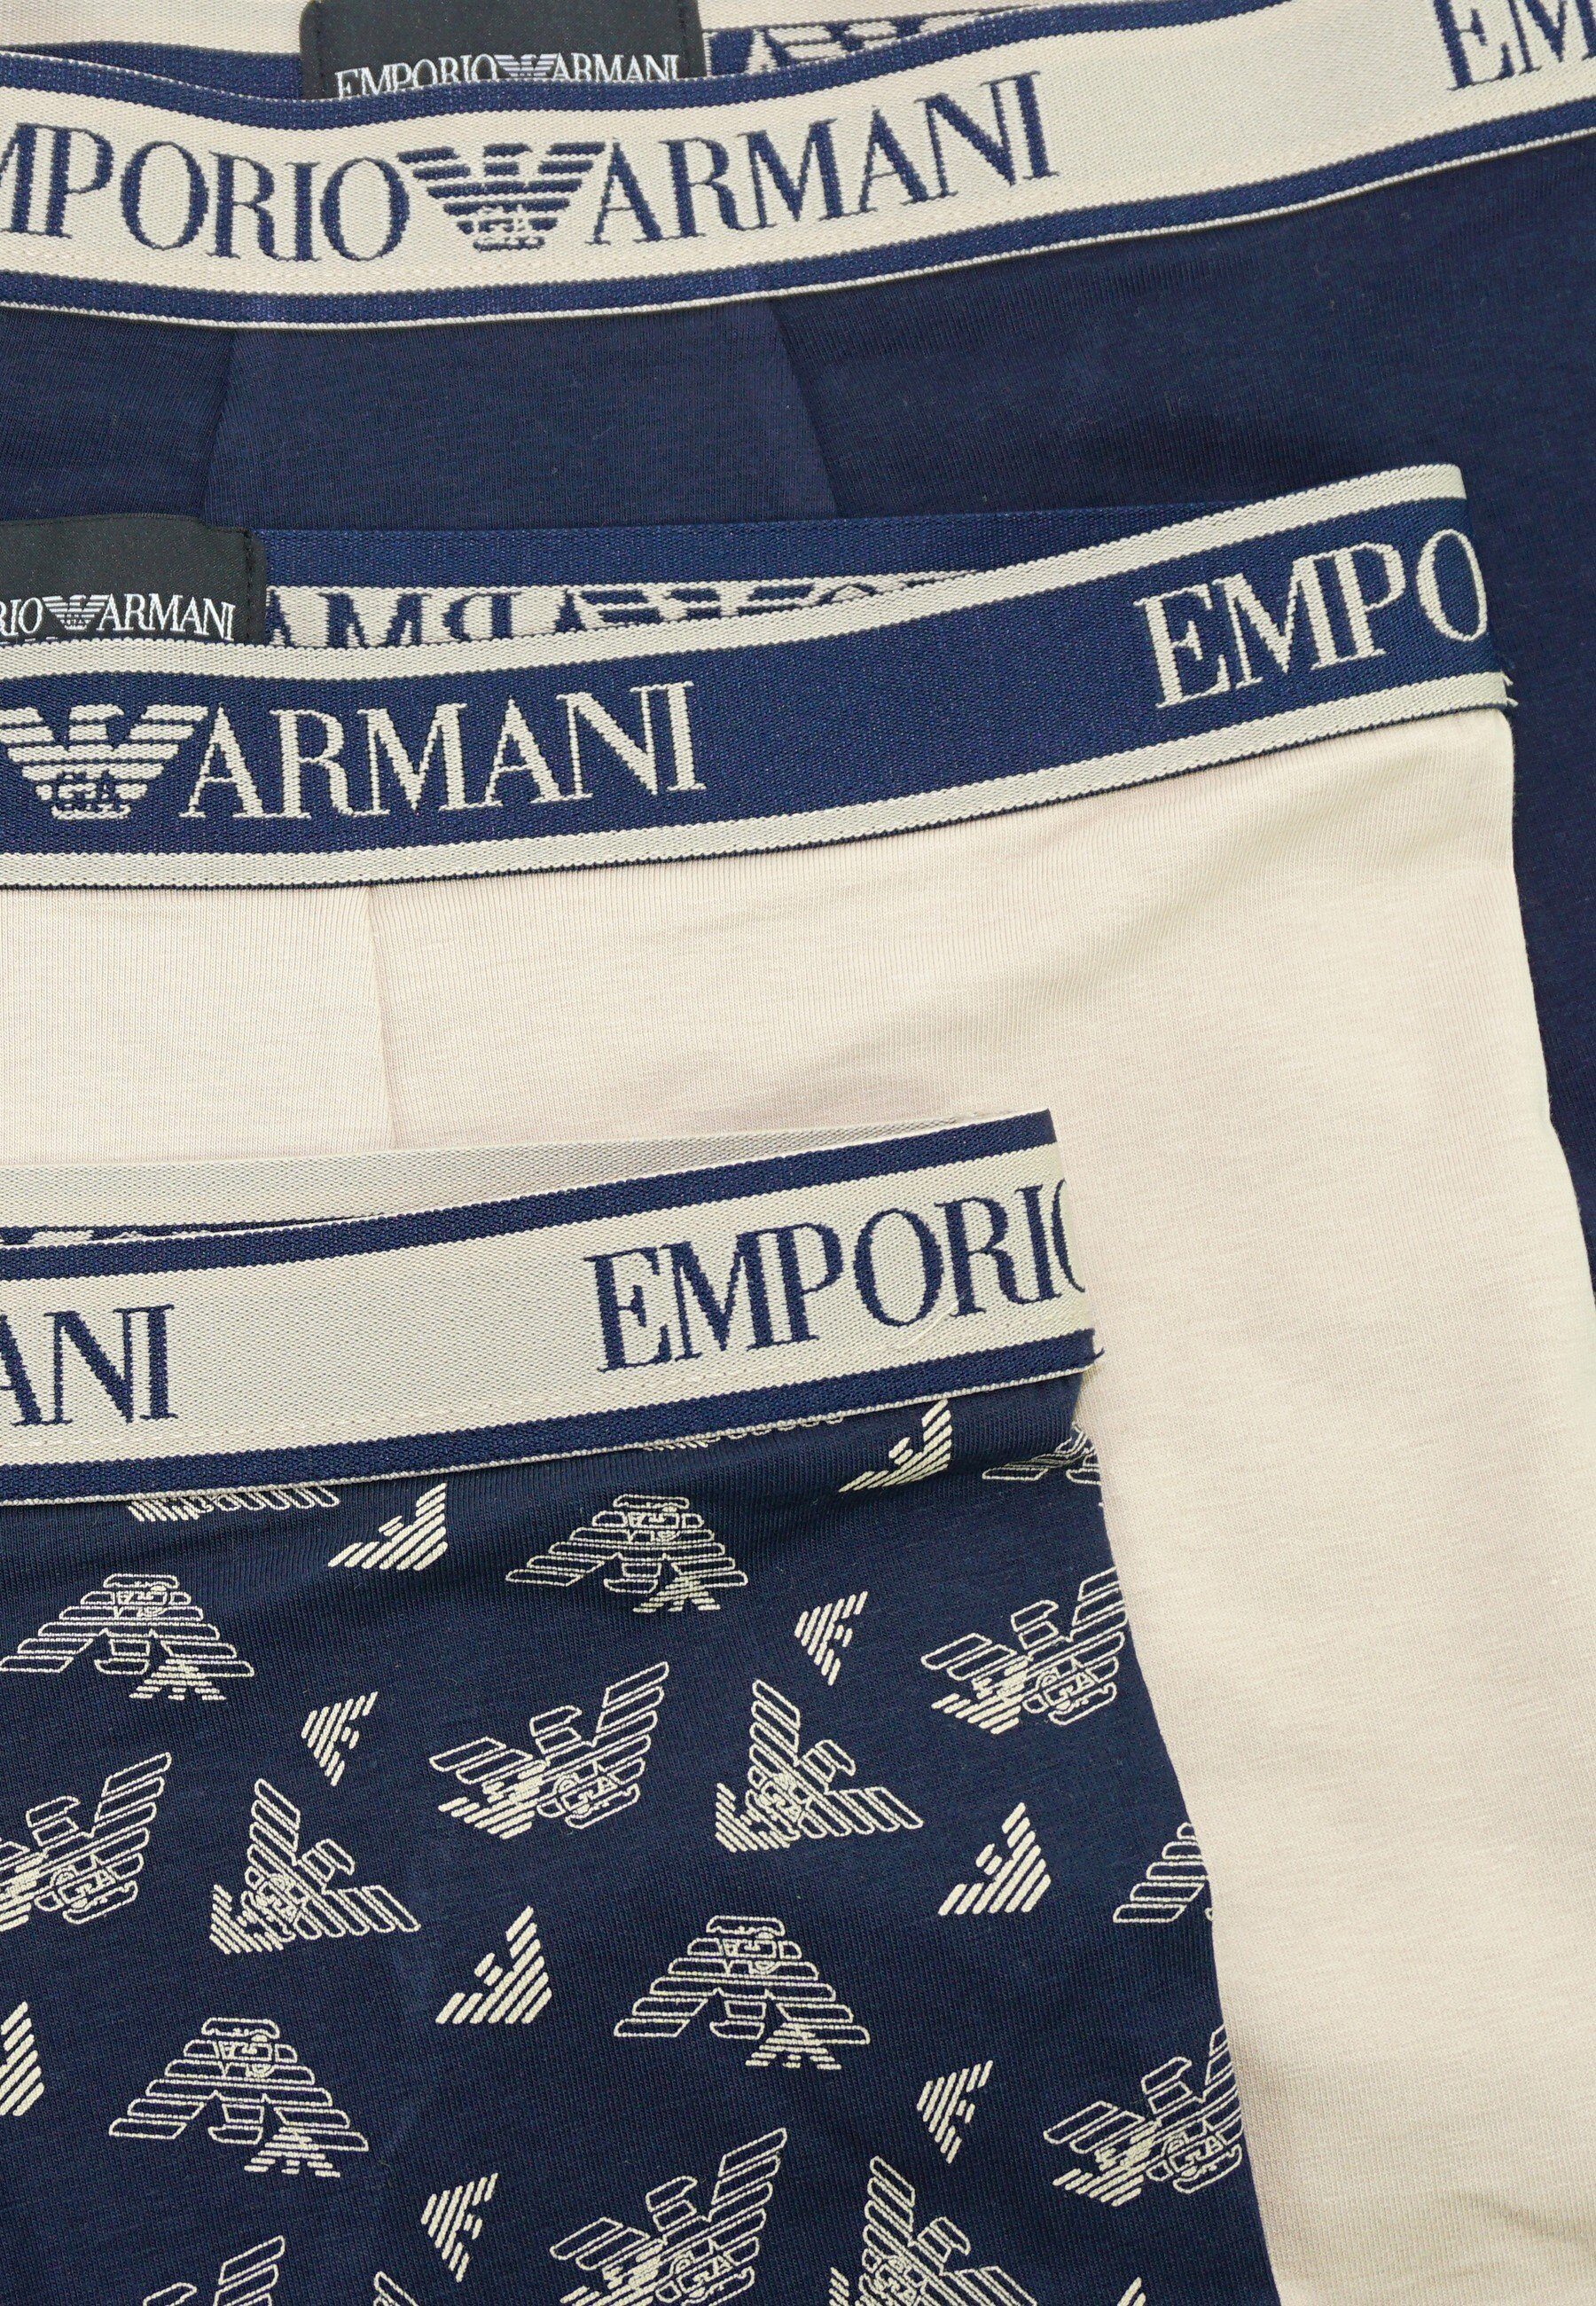 Boxer Armani 3 Shorts (3-St) Emporio Pack Knit Boxershorts